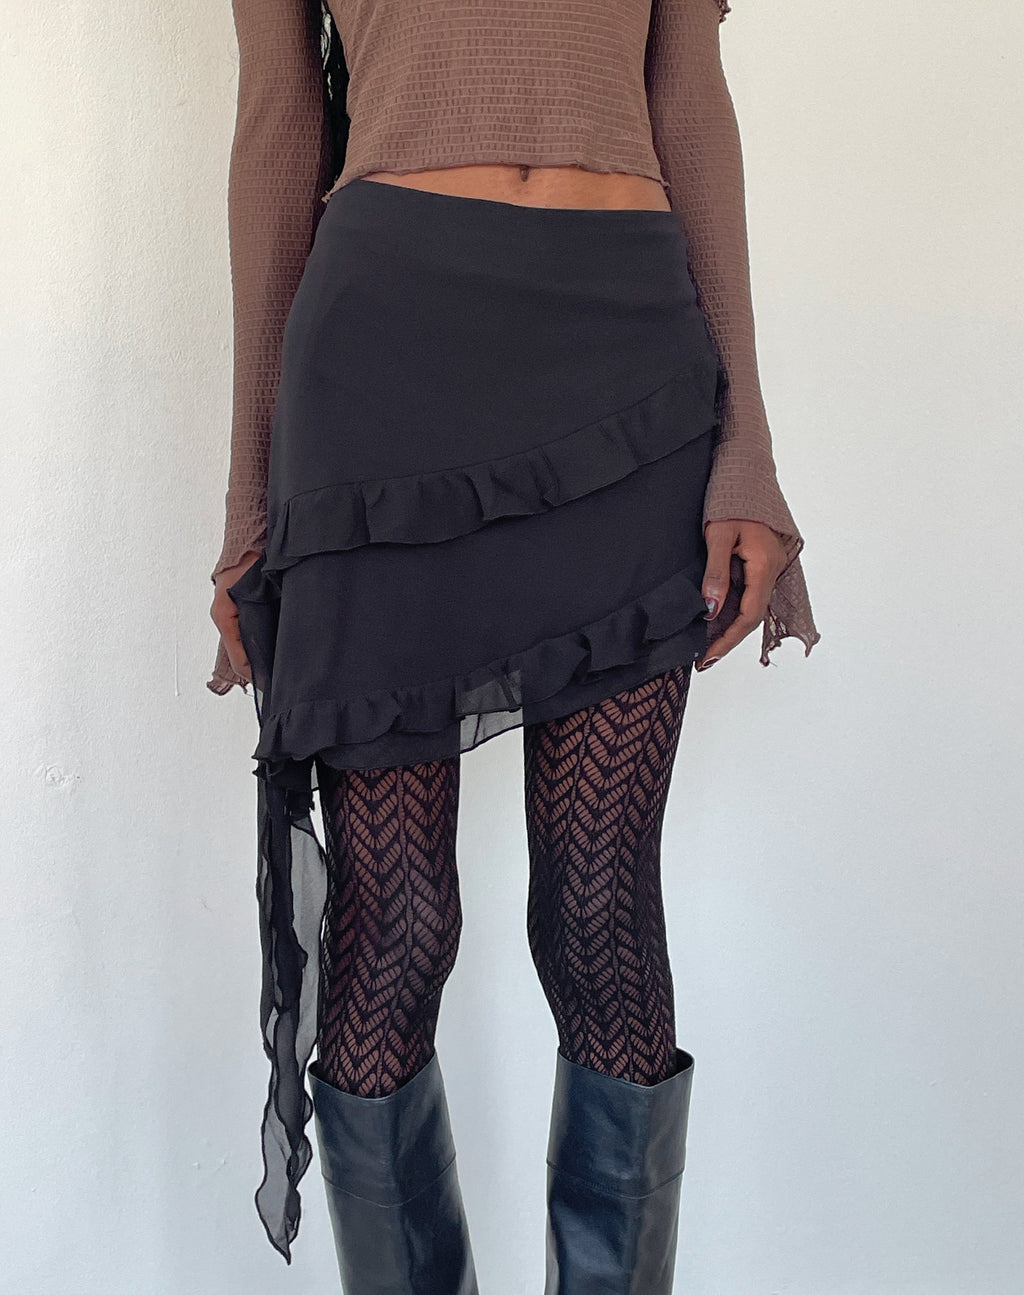 Malinna Ruffle Mini Skirt in Black Chiffon